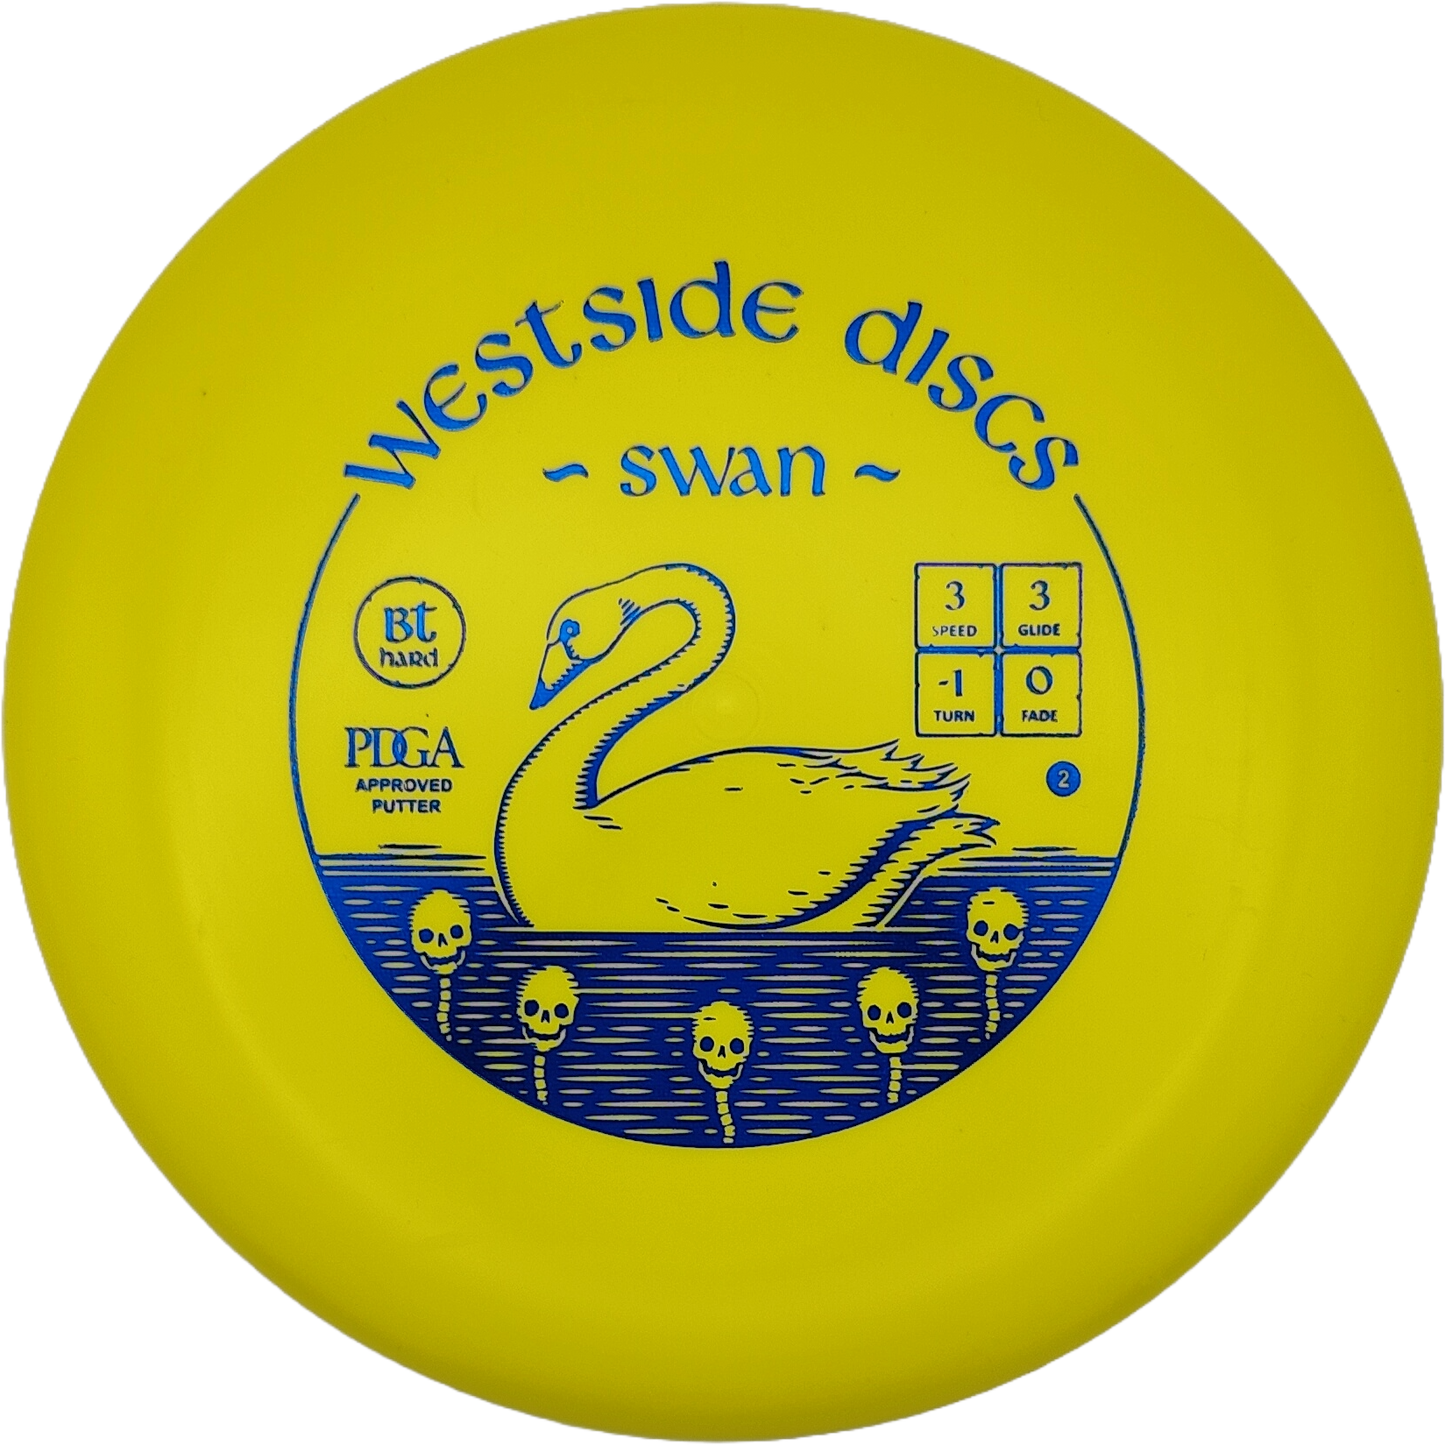 Westside Discs Swan 2 BT Hard